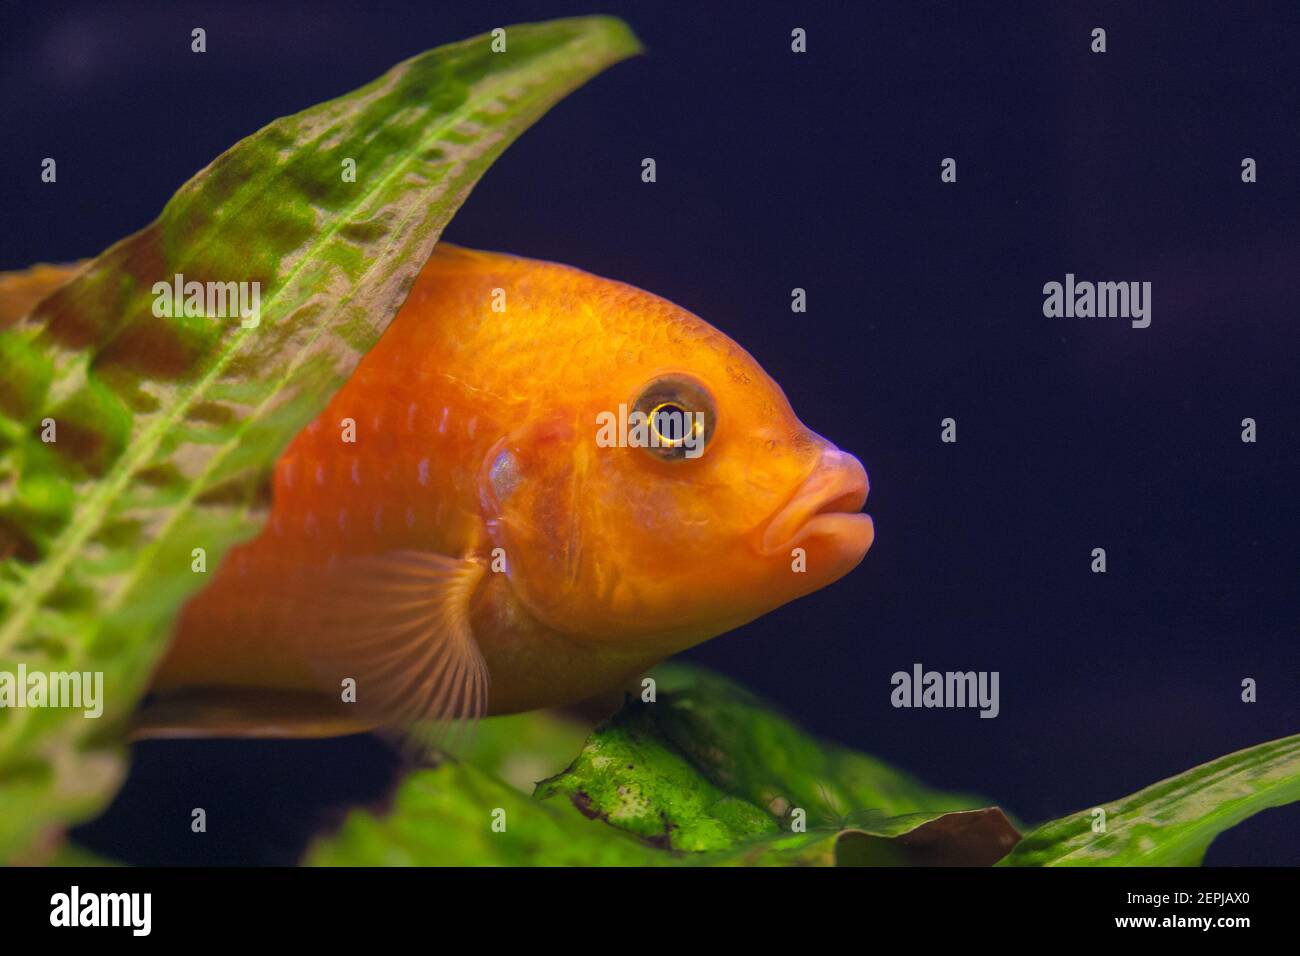 Kenyi cichlid Maylandia lombardoi aquarium fish Stock Photo